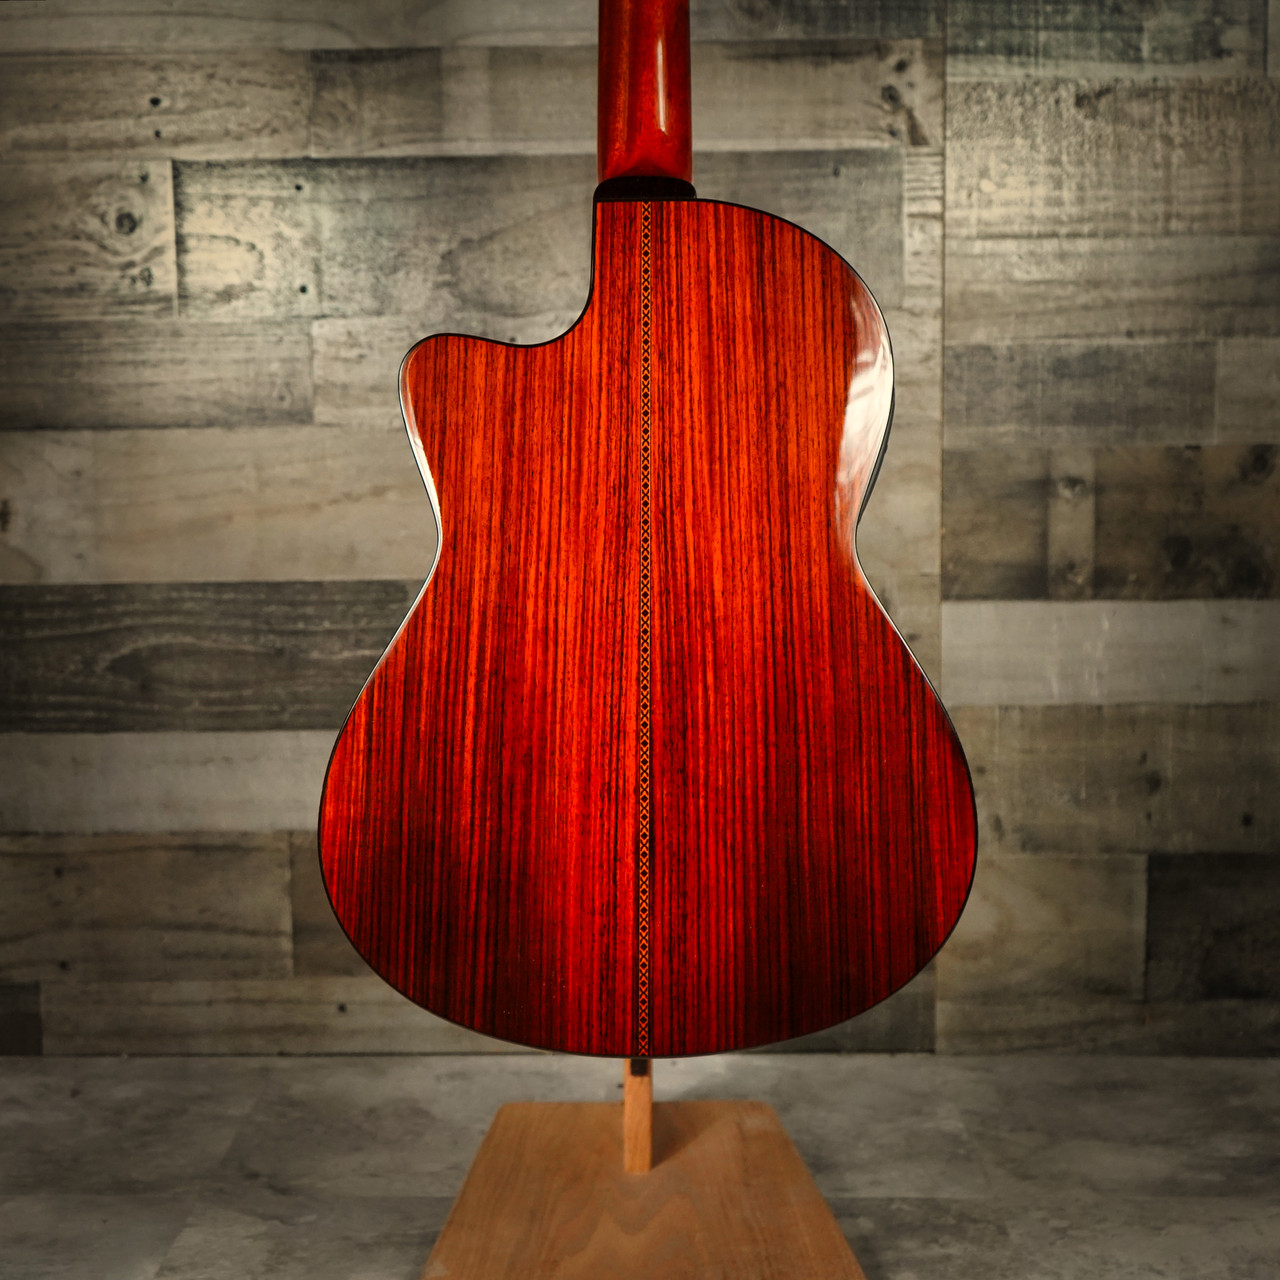 Alvarez Yairi CY75CE Masterworks Classical Acoustic-Electric Guitar - Natural Gloss